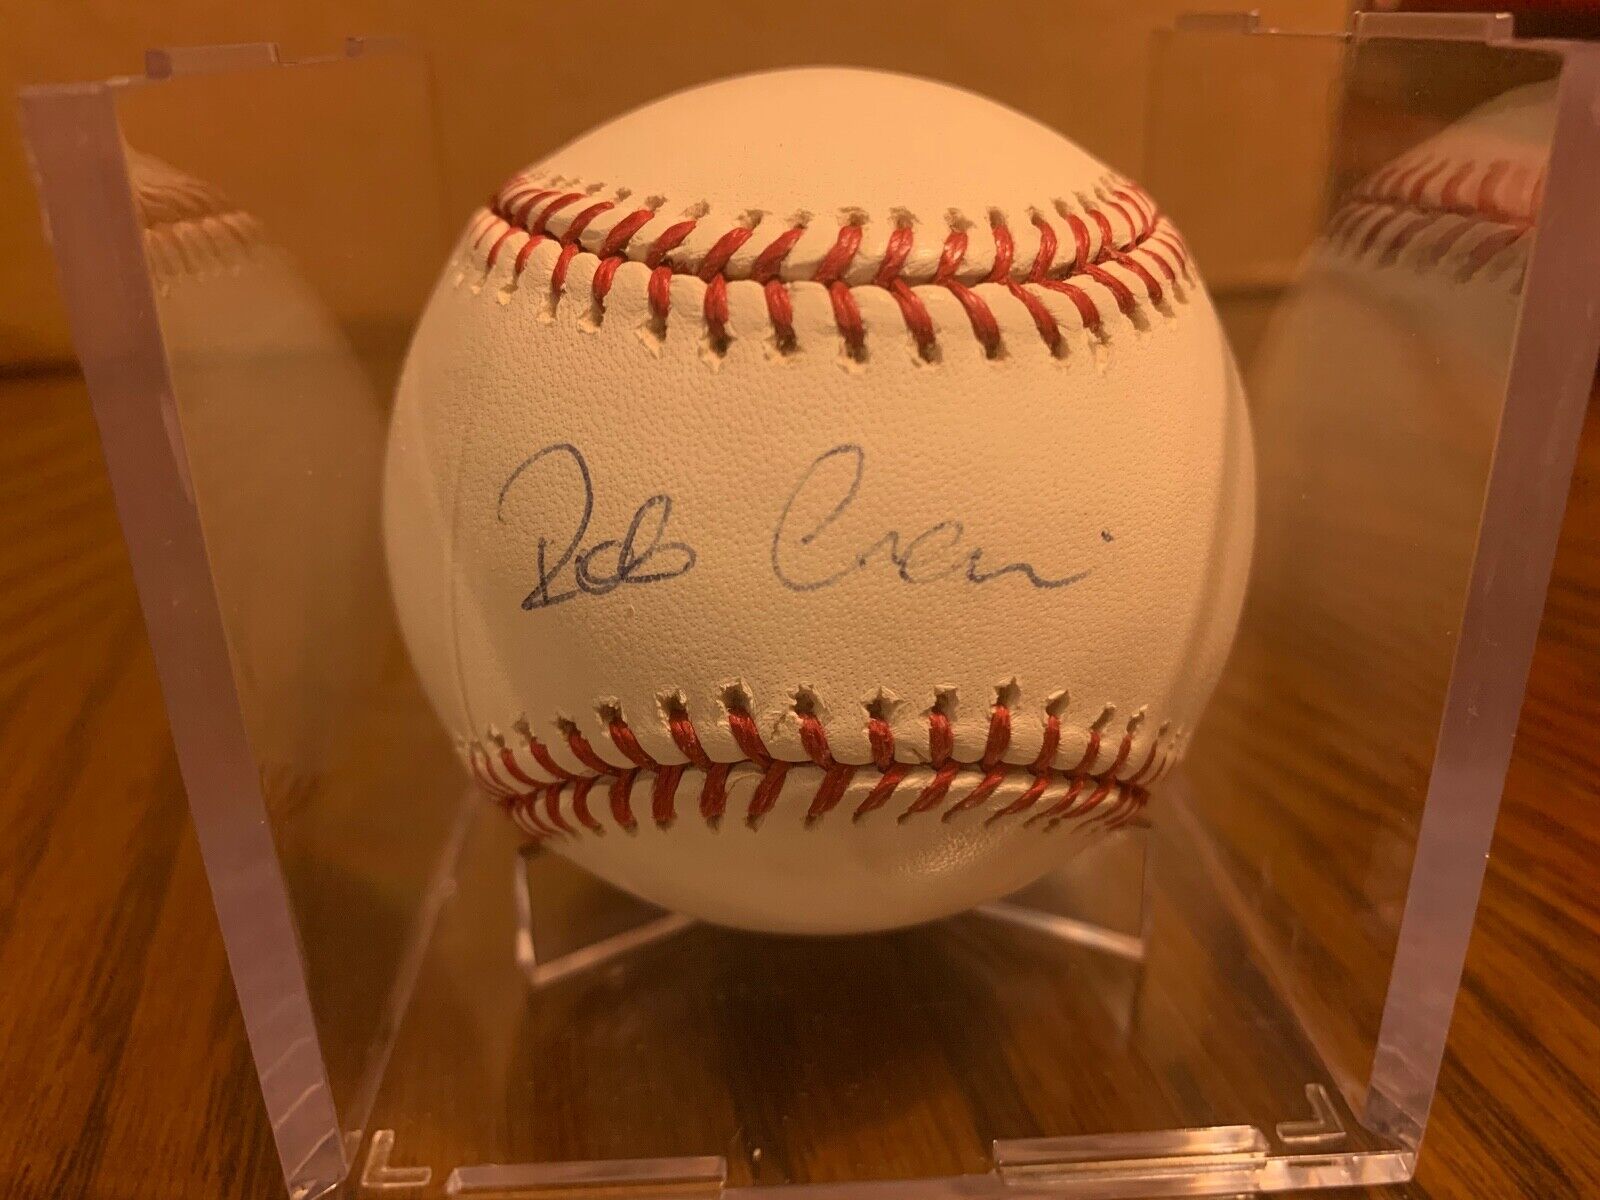 Robinson Cano Mets Yankees Signed Autographed Baseball W/ PSA COA AI78670 MLB